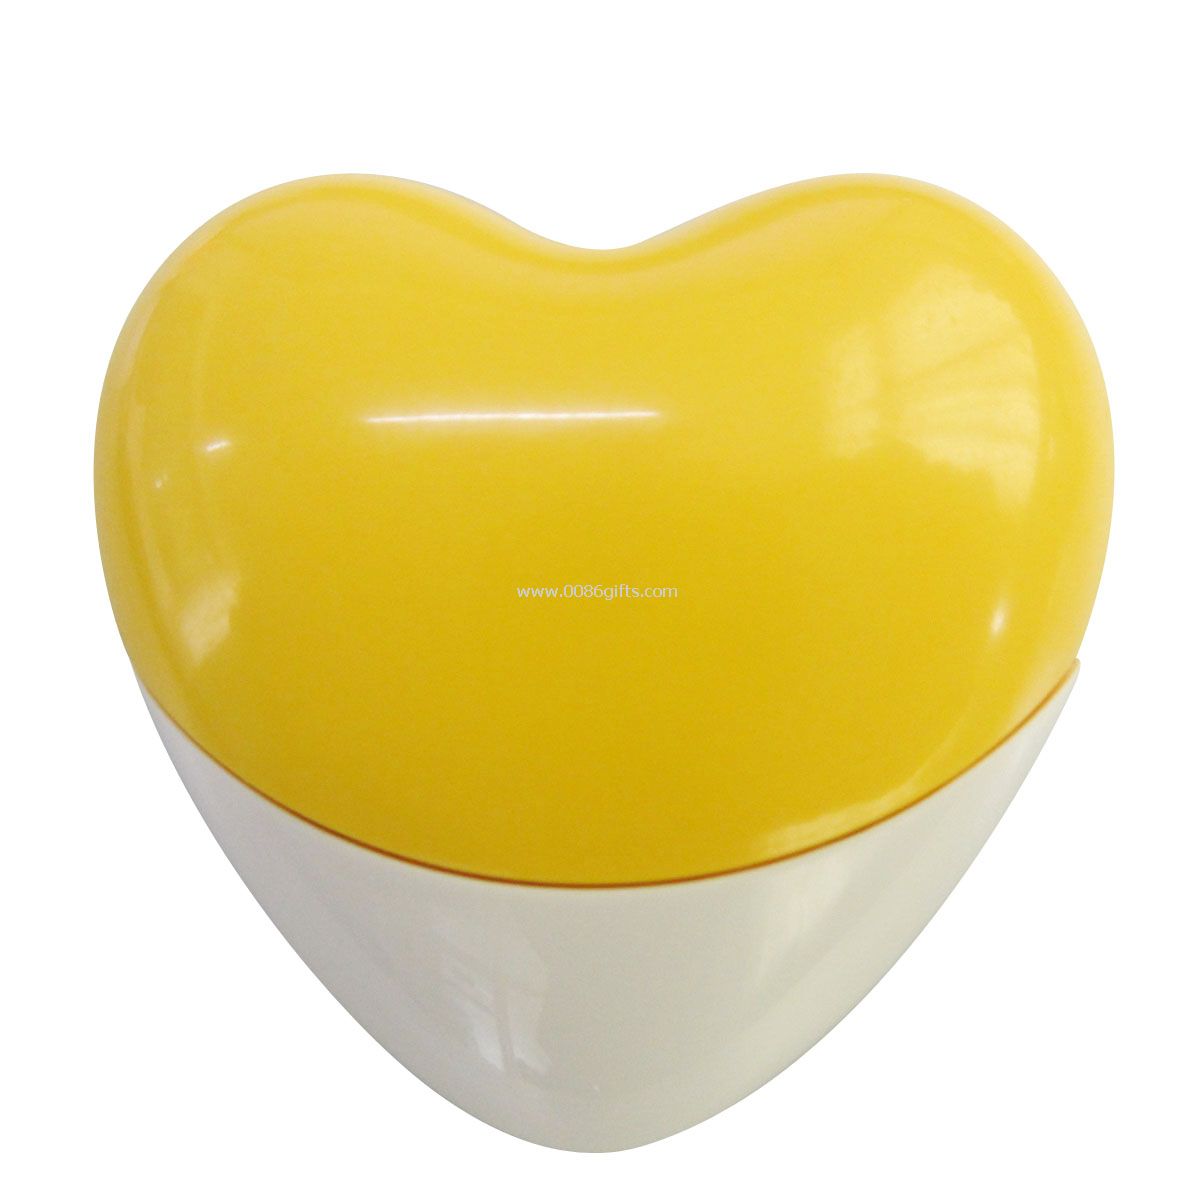 Heart shape pedometer